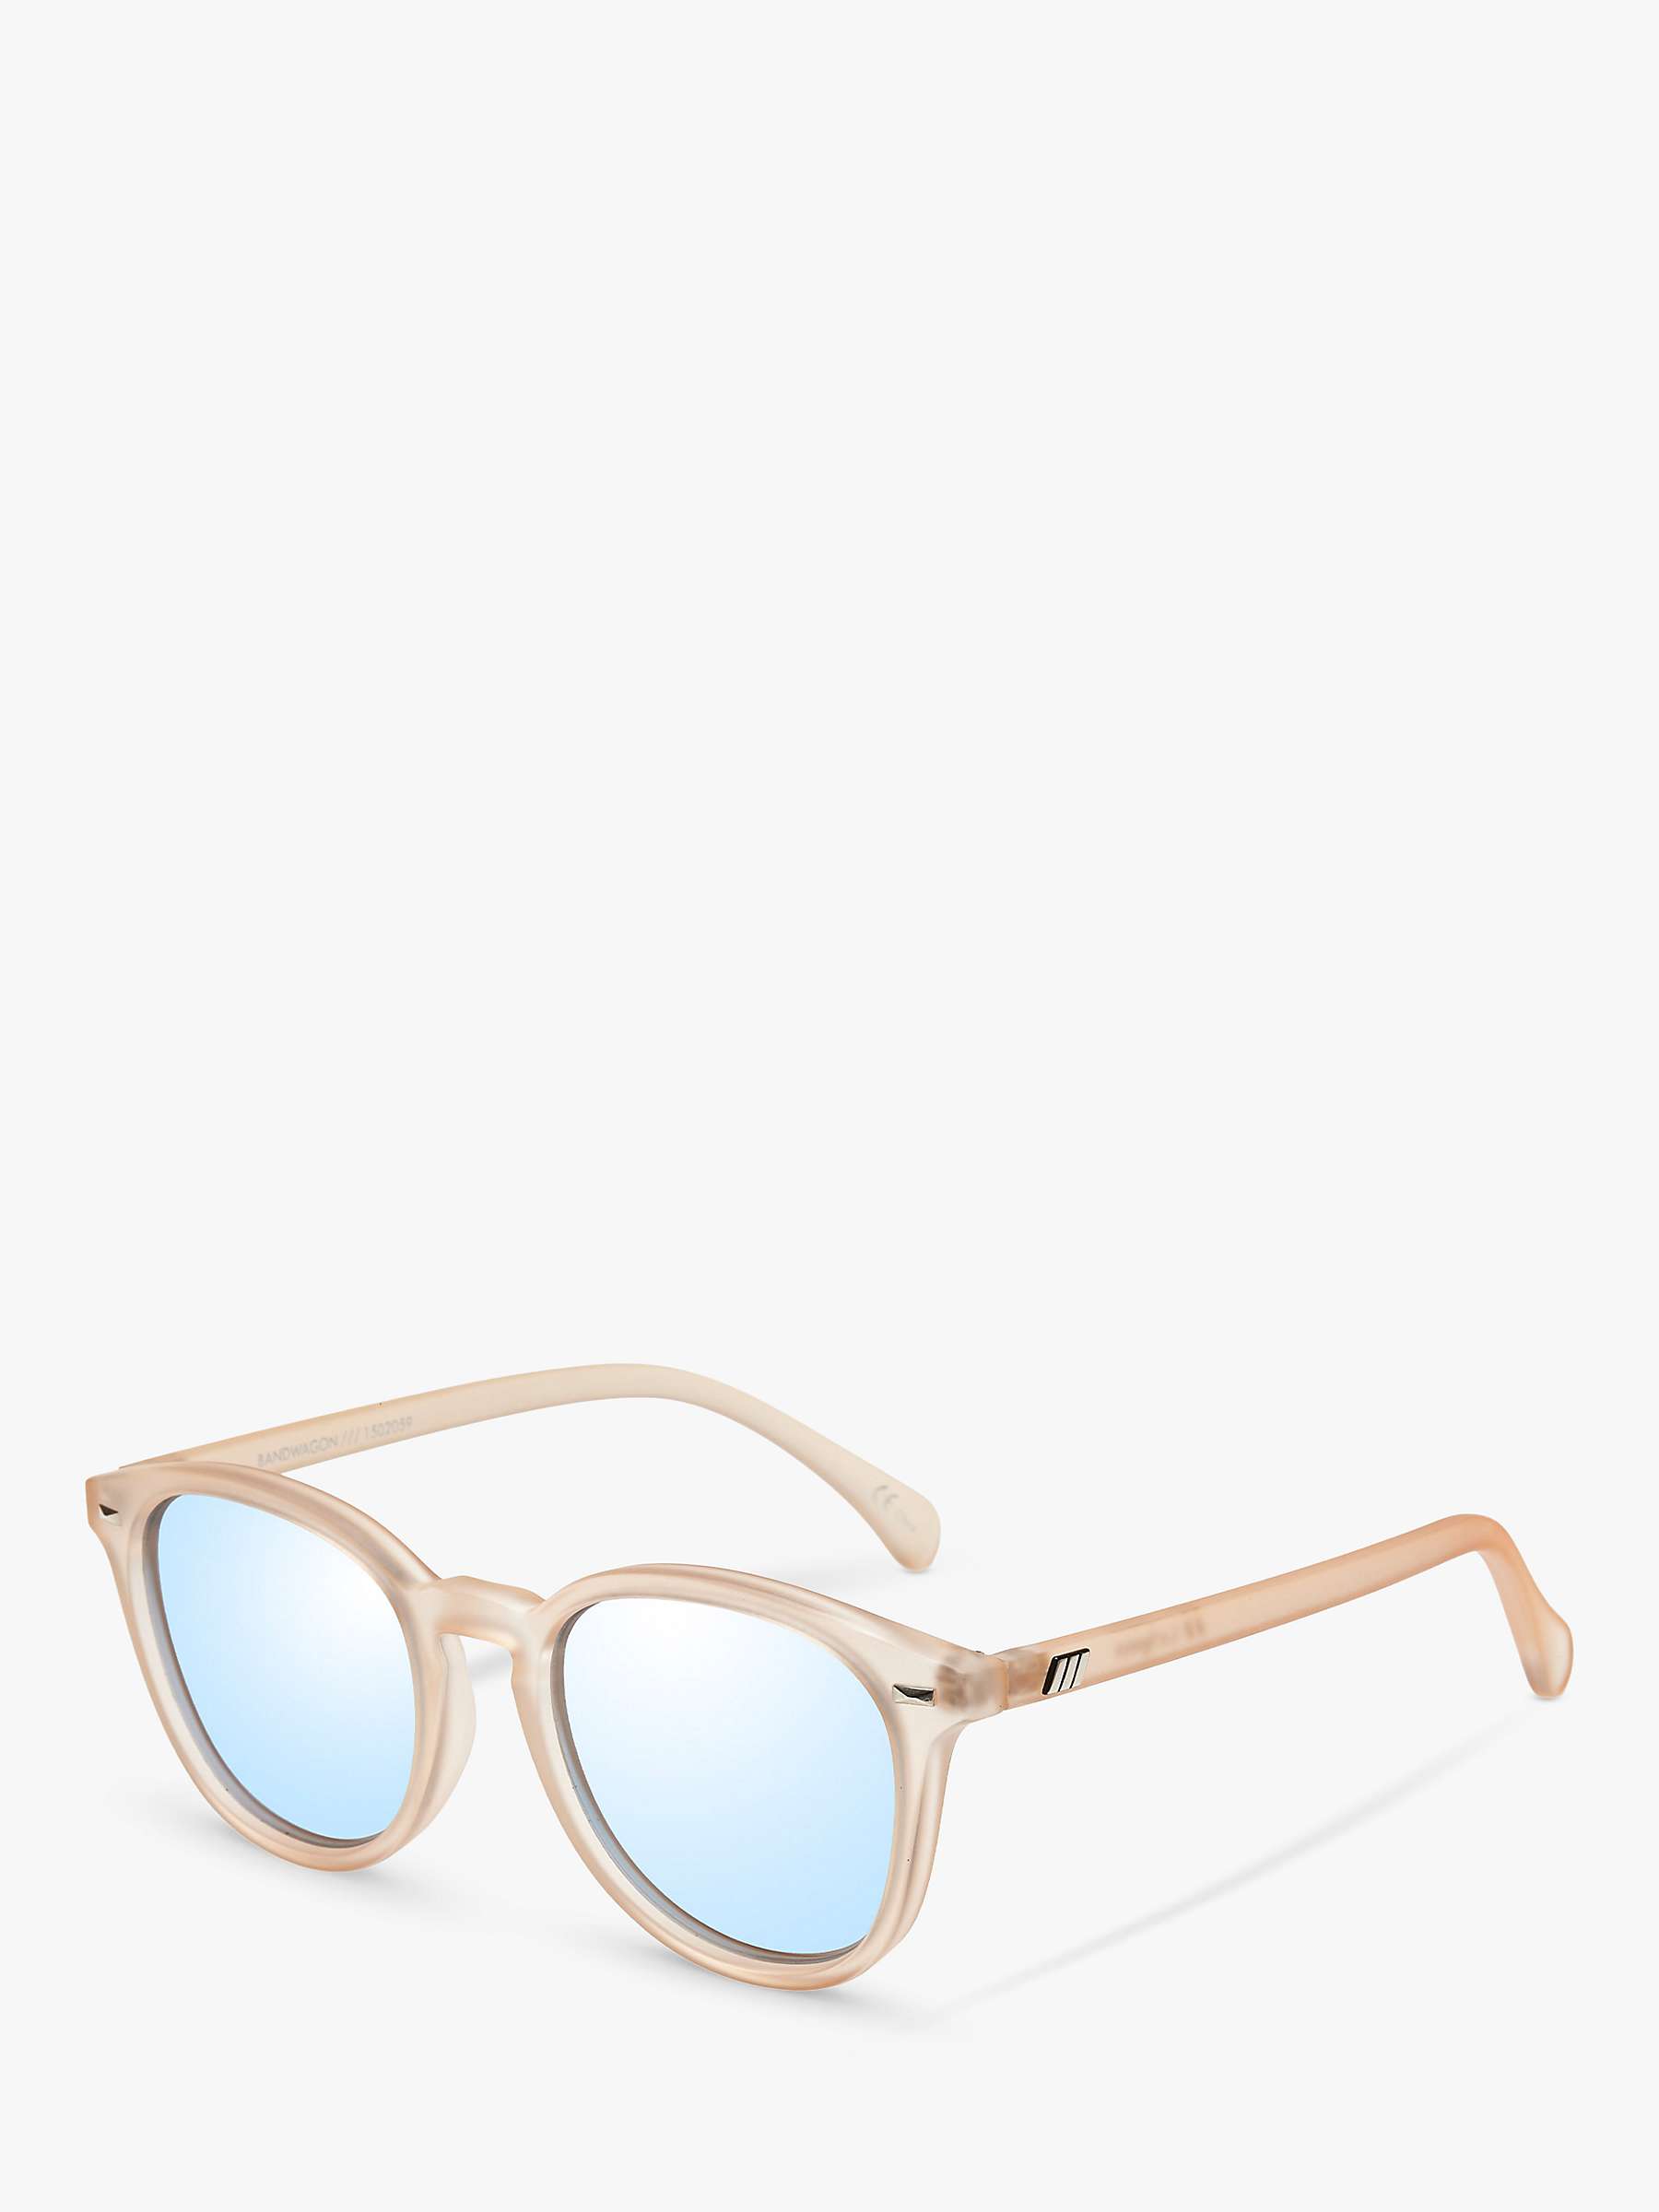 Buy Le Specs Unisex Bandwagon Round Sunglasses Online at johnlewis.com